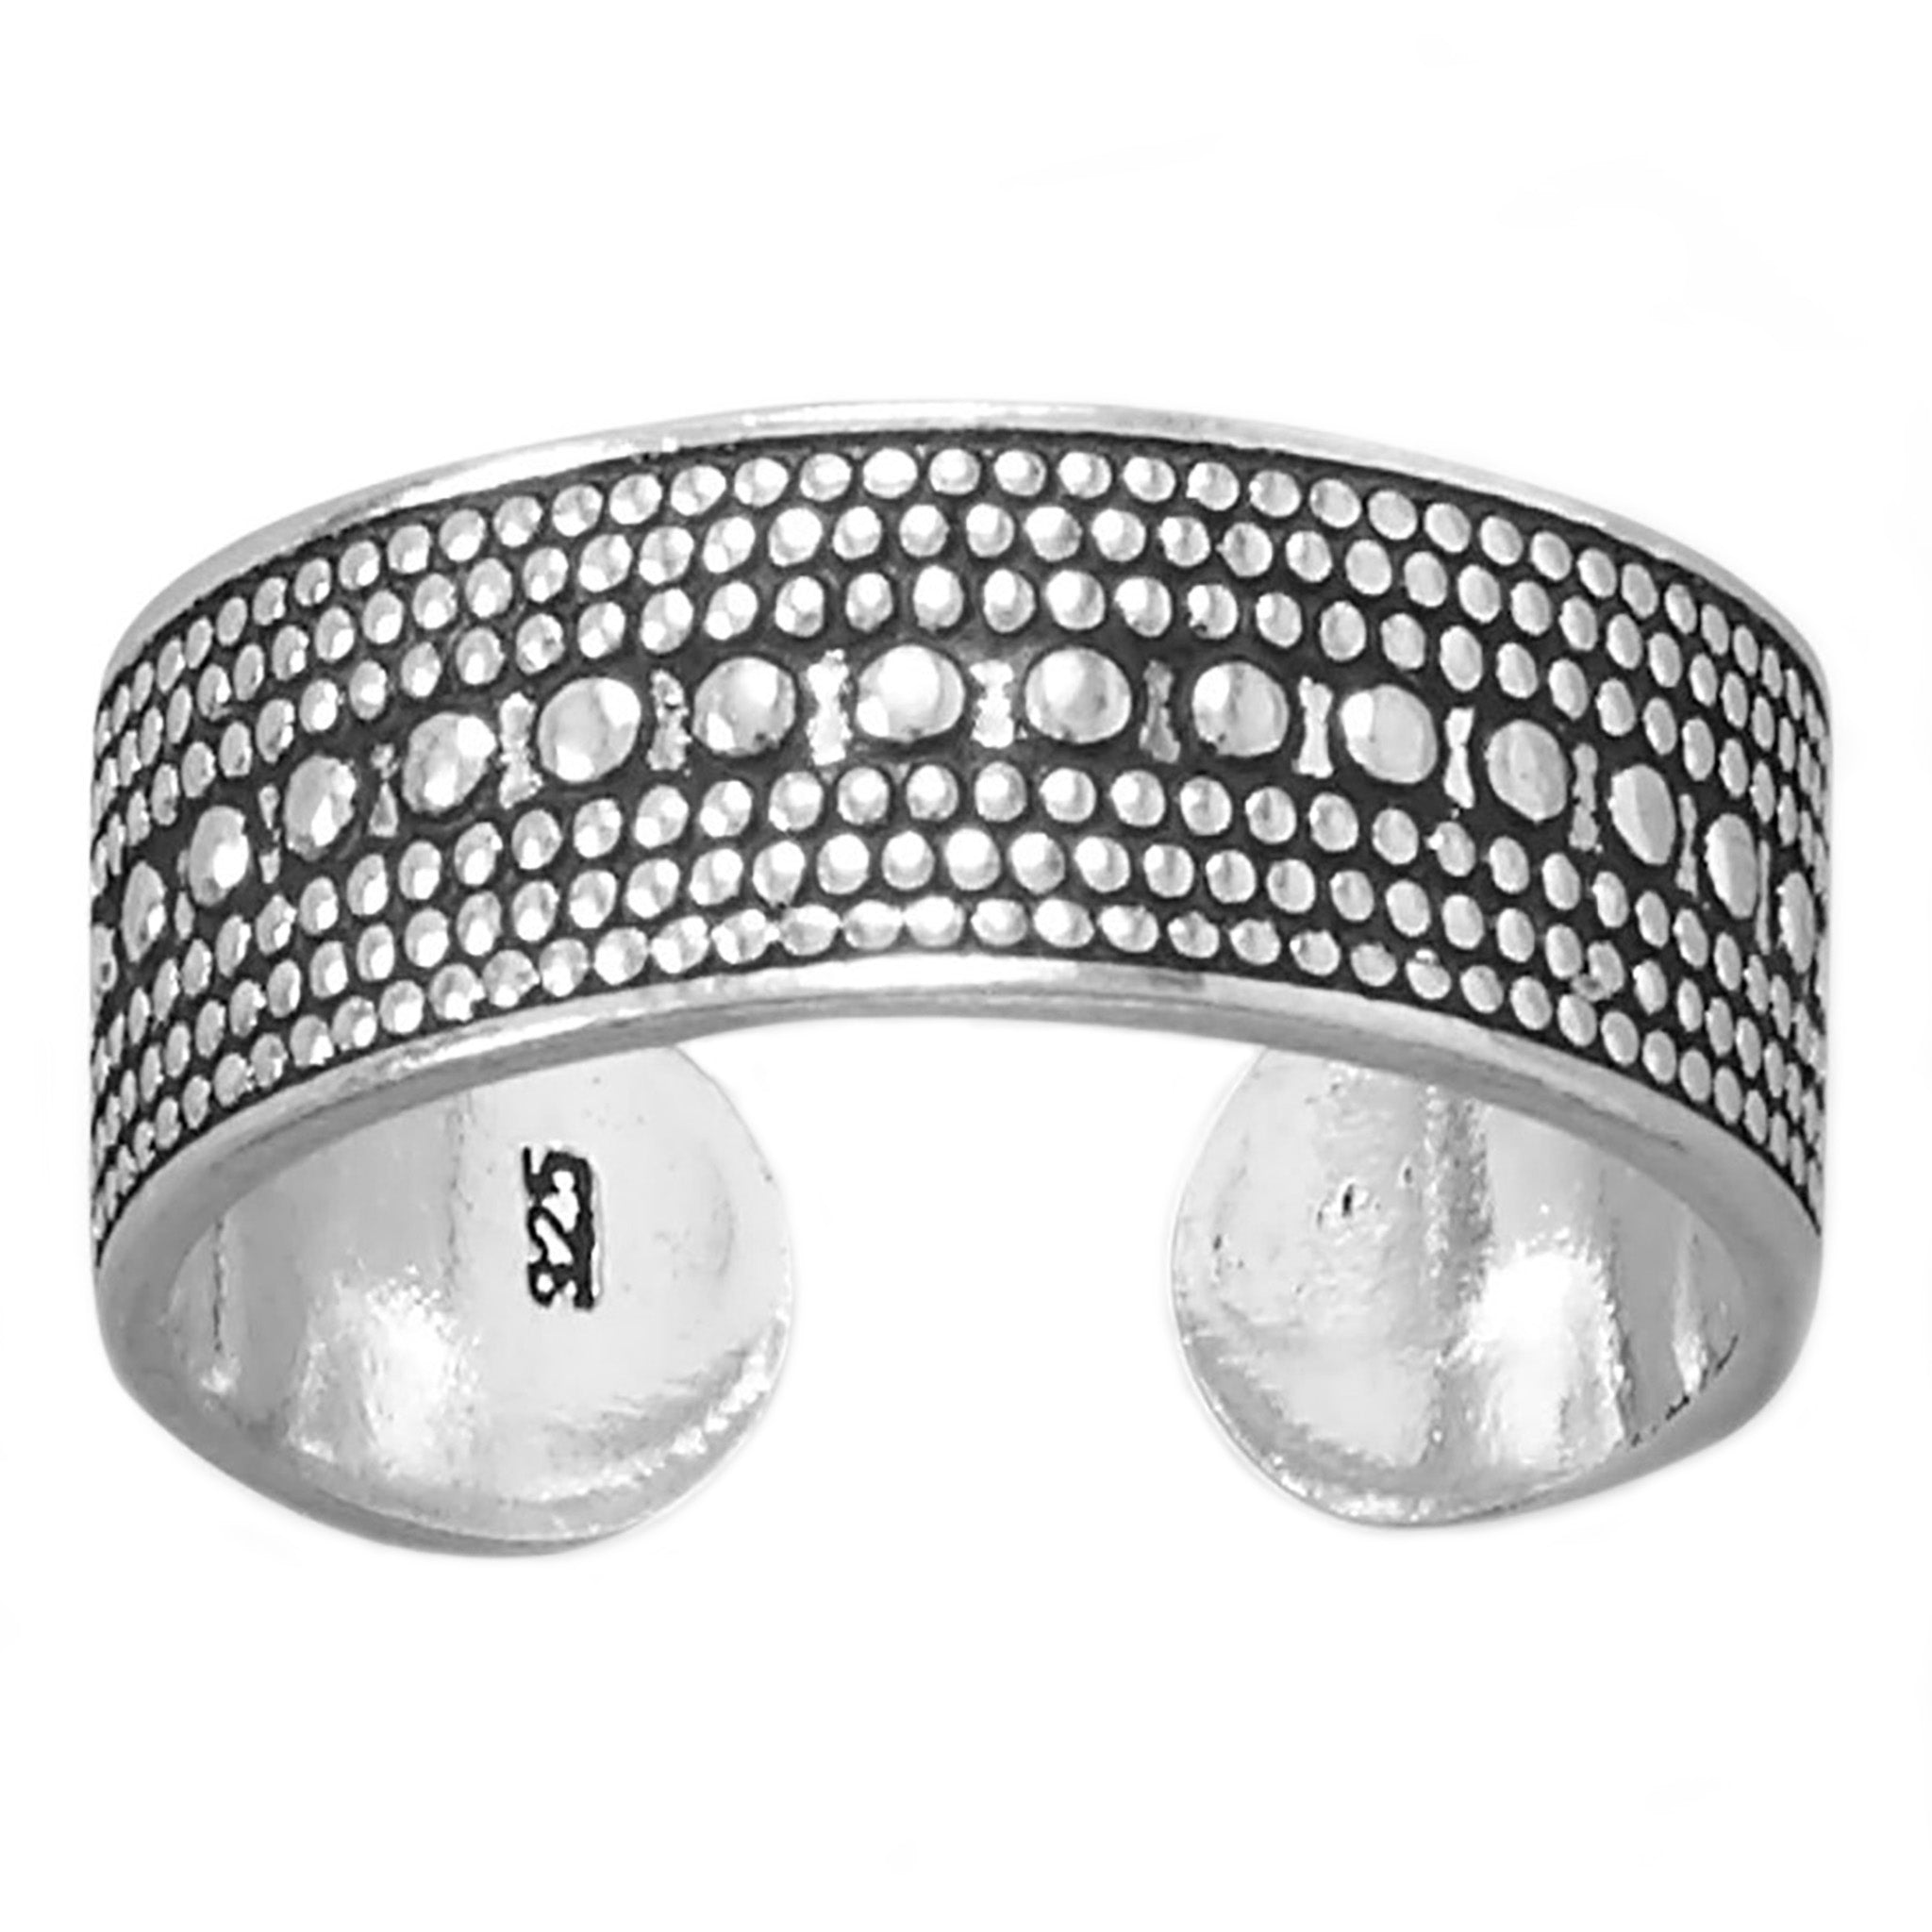 Bead Design Toe Ring